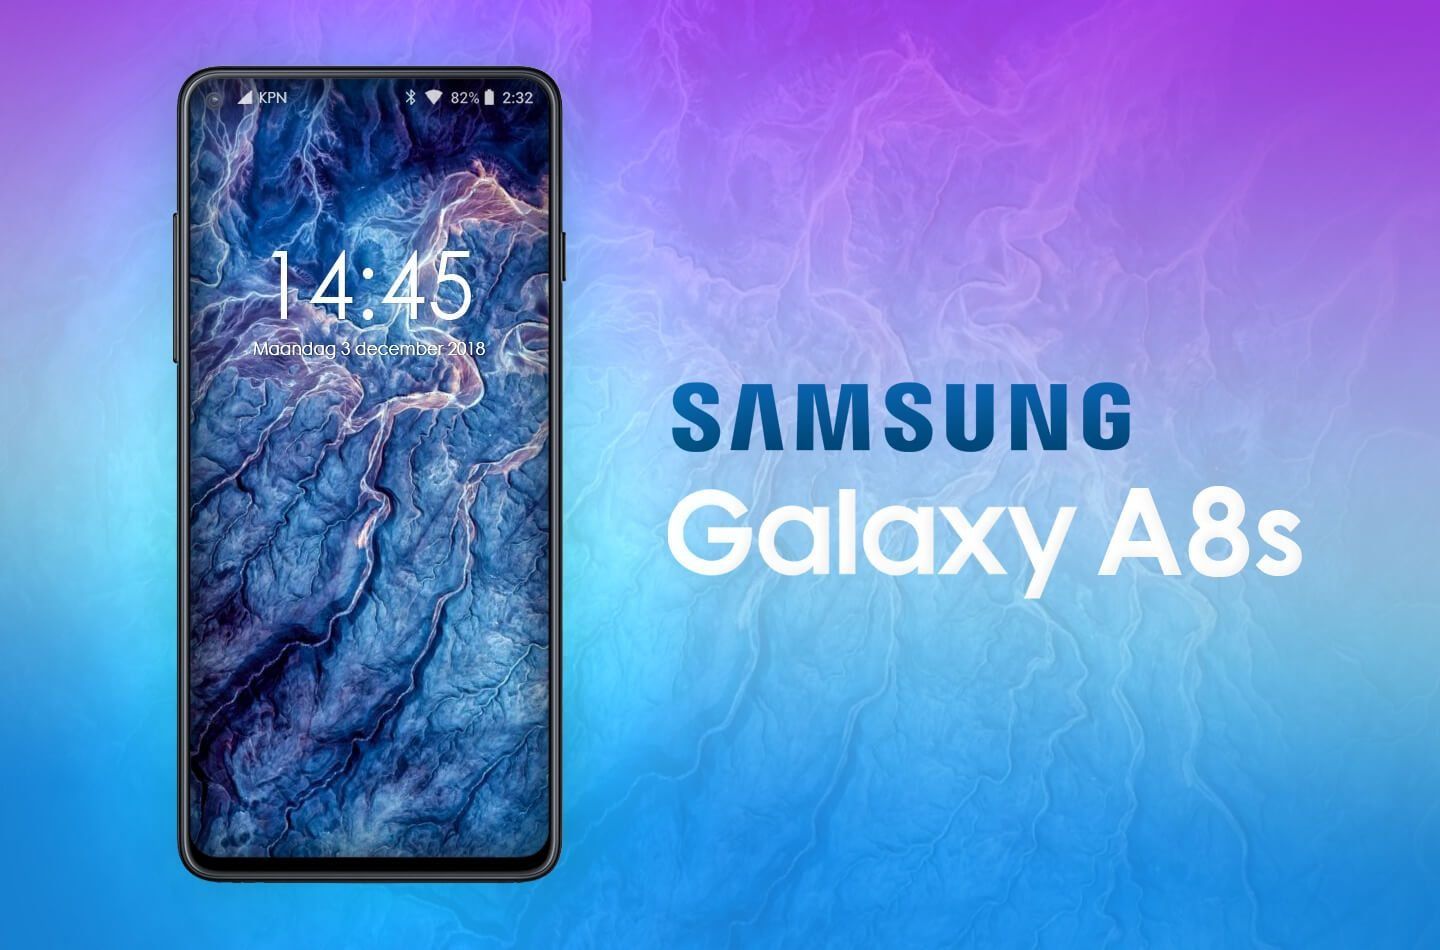 Samsung Galaxy A8s - advantages and disadvantages